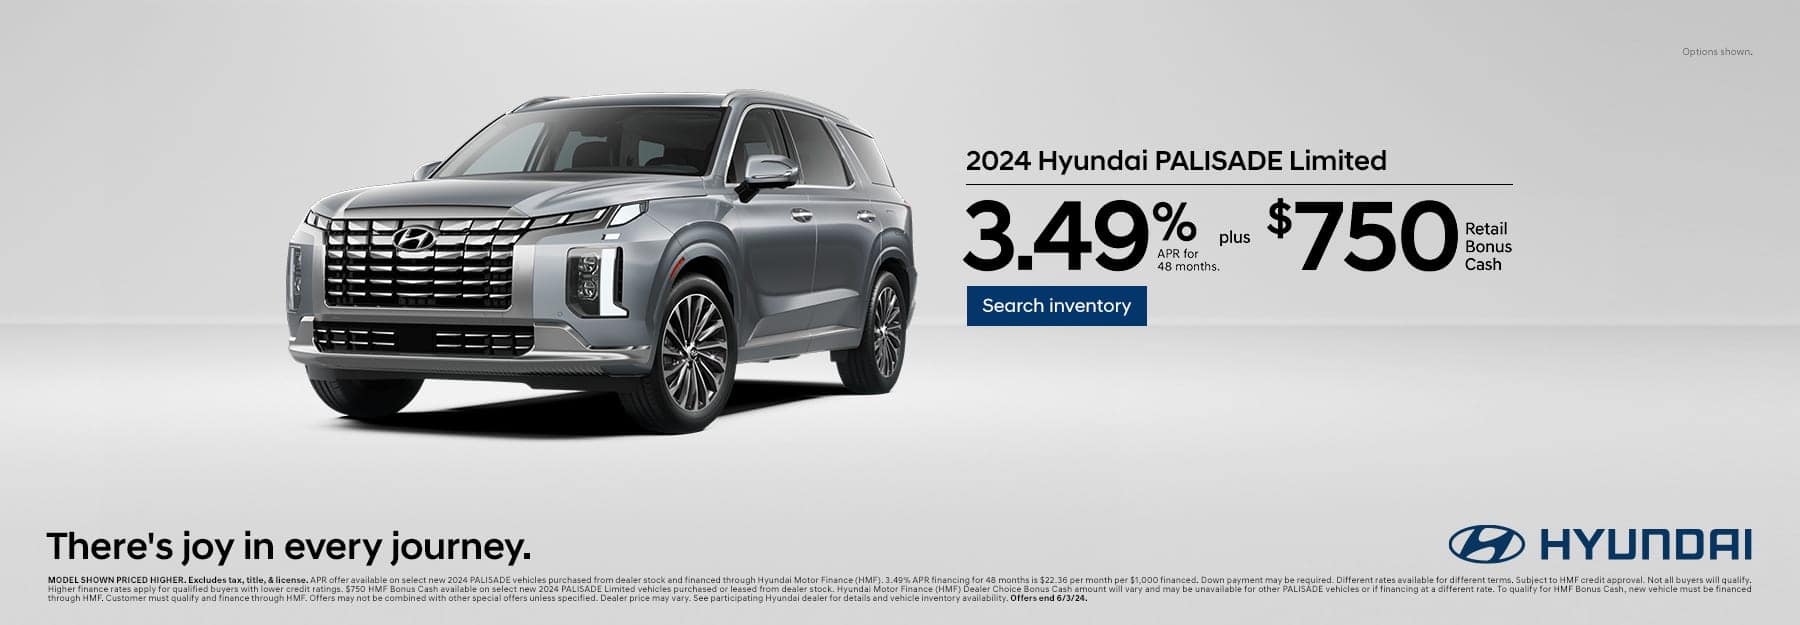 Hyundai Palisade offer